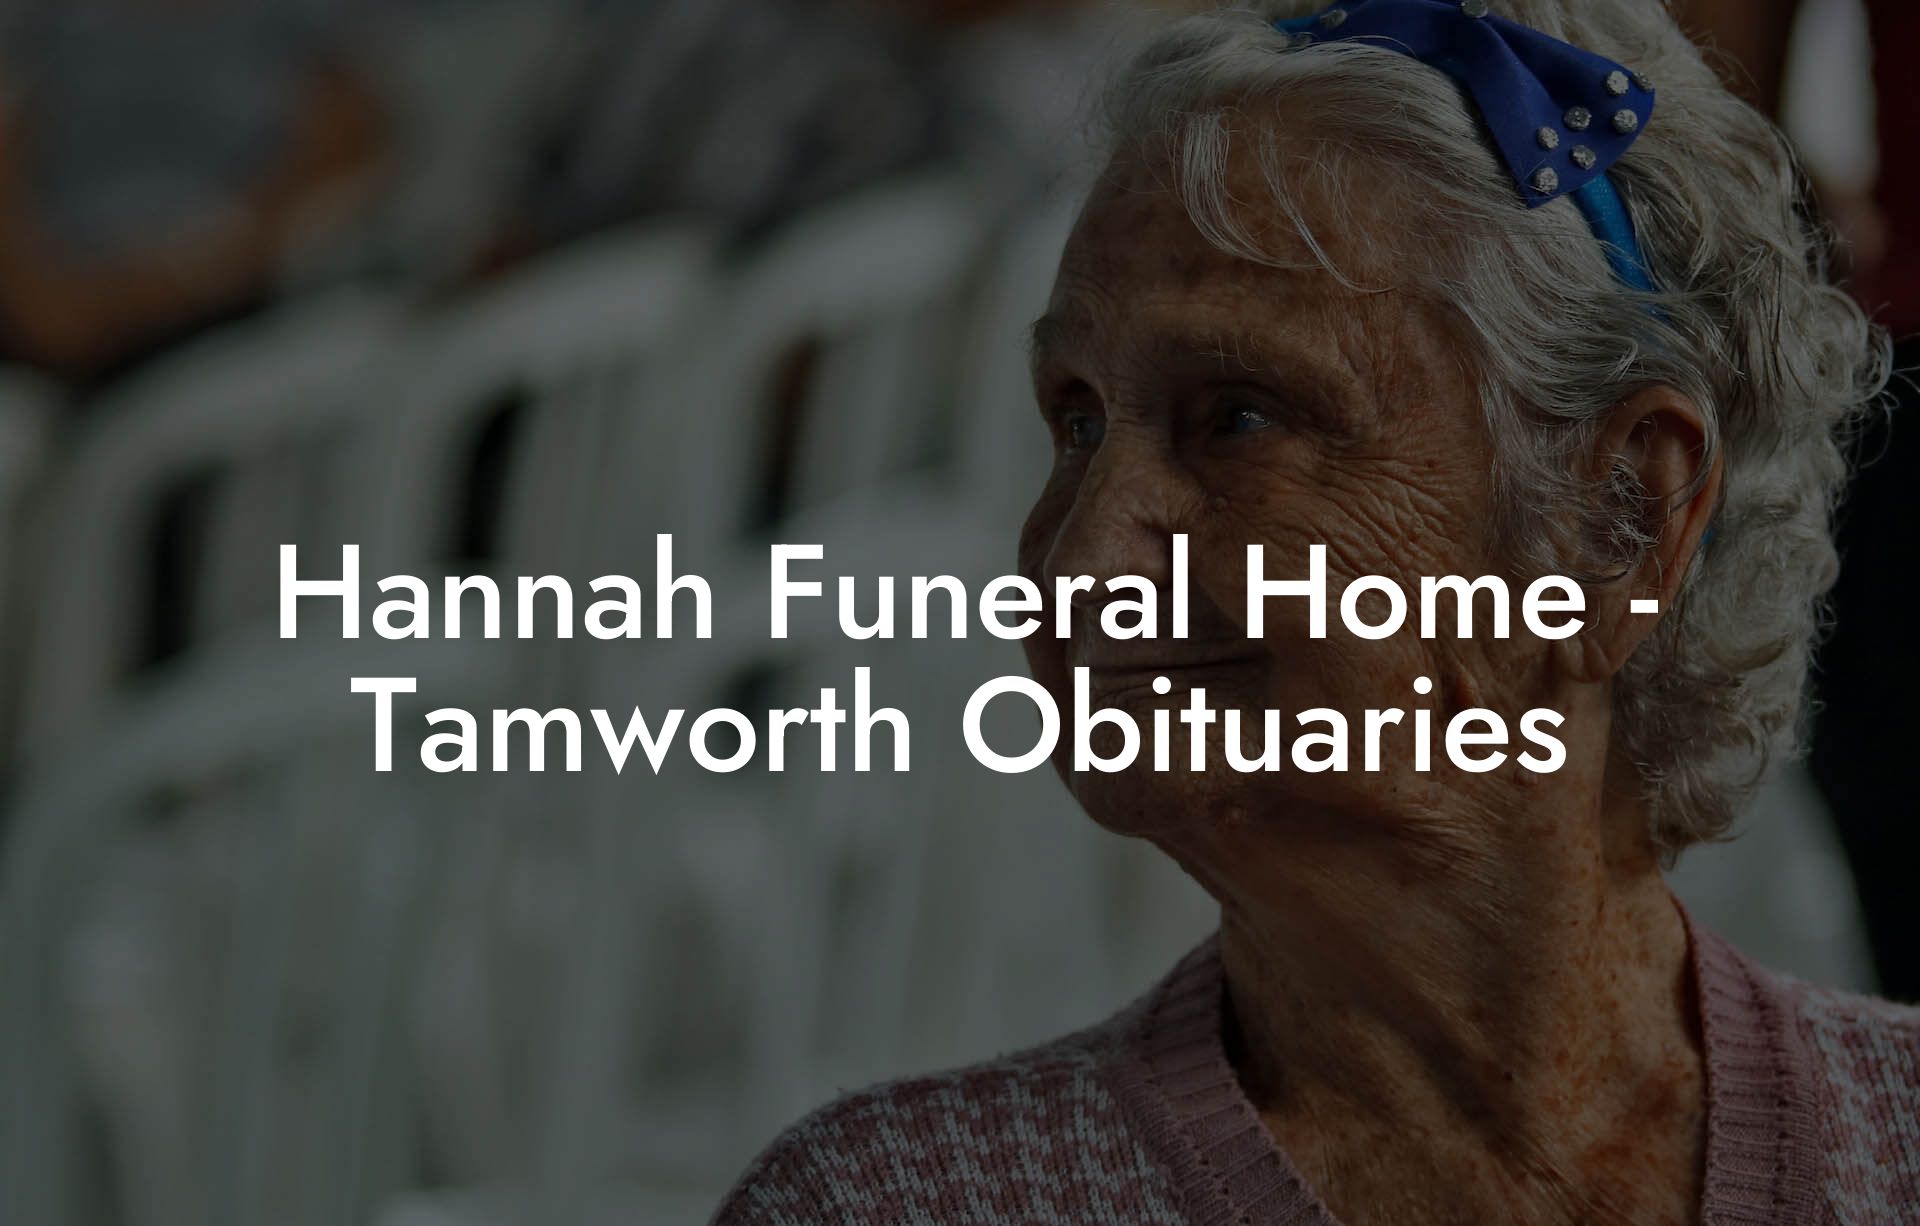 Hannah Funeral Home - Tamworth Obituaries